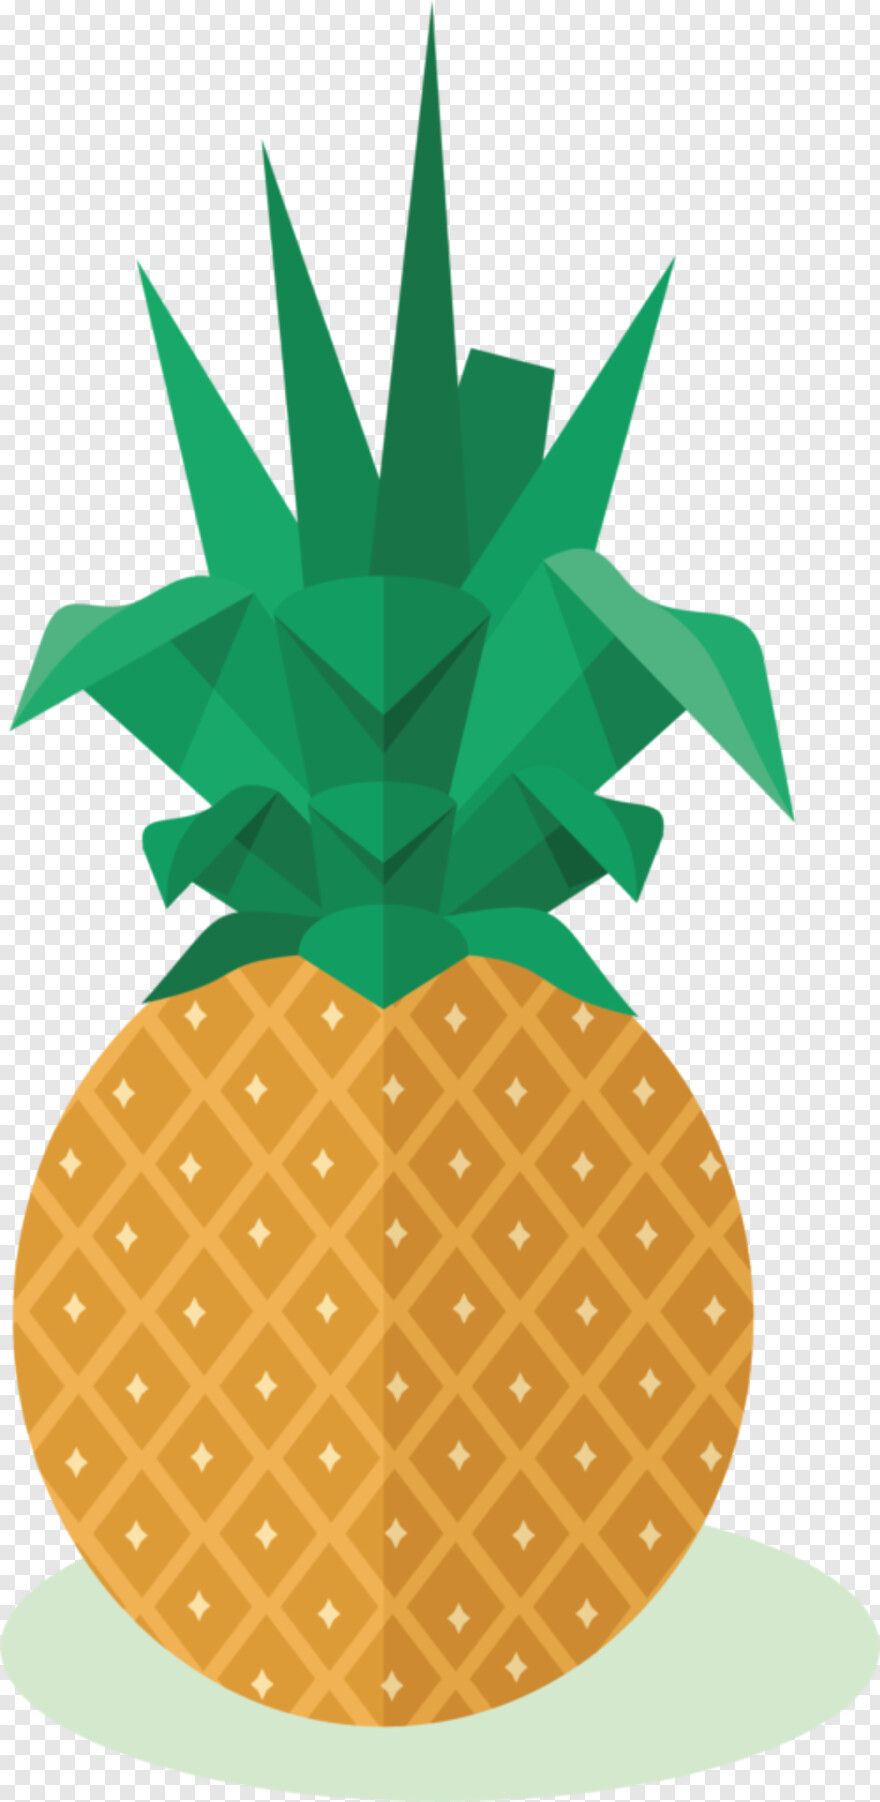 pineapple # 809659